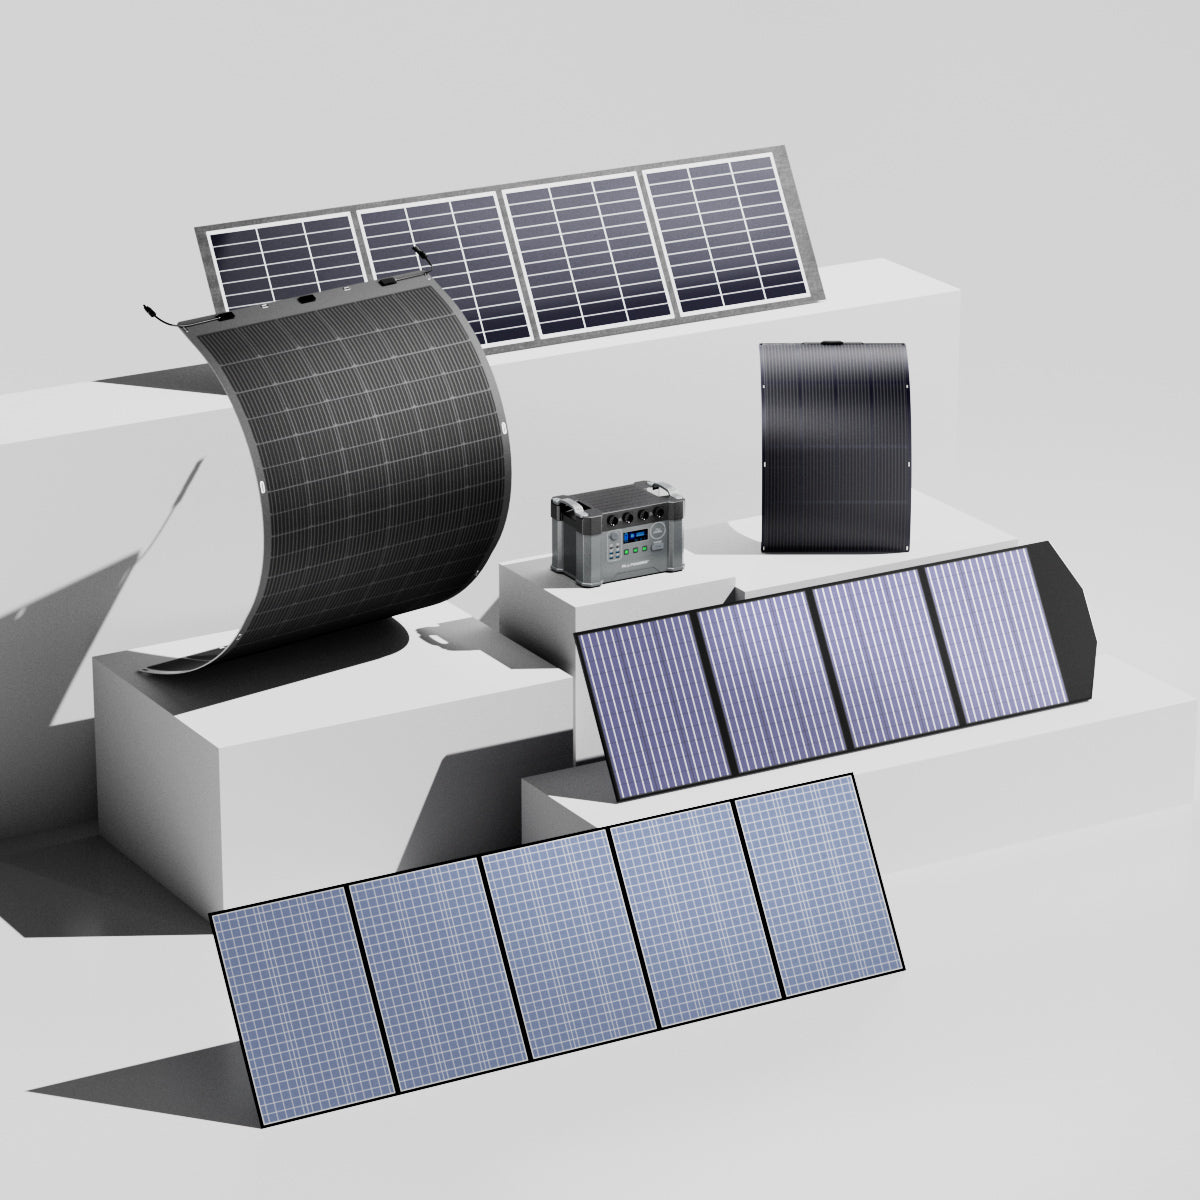 s2000-pro-2400w-power-station-with-solar-panels-eu.jpg